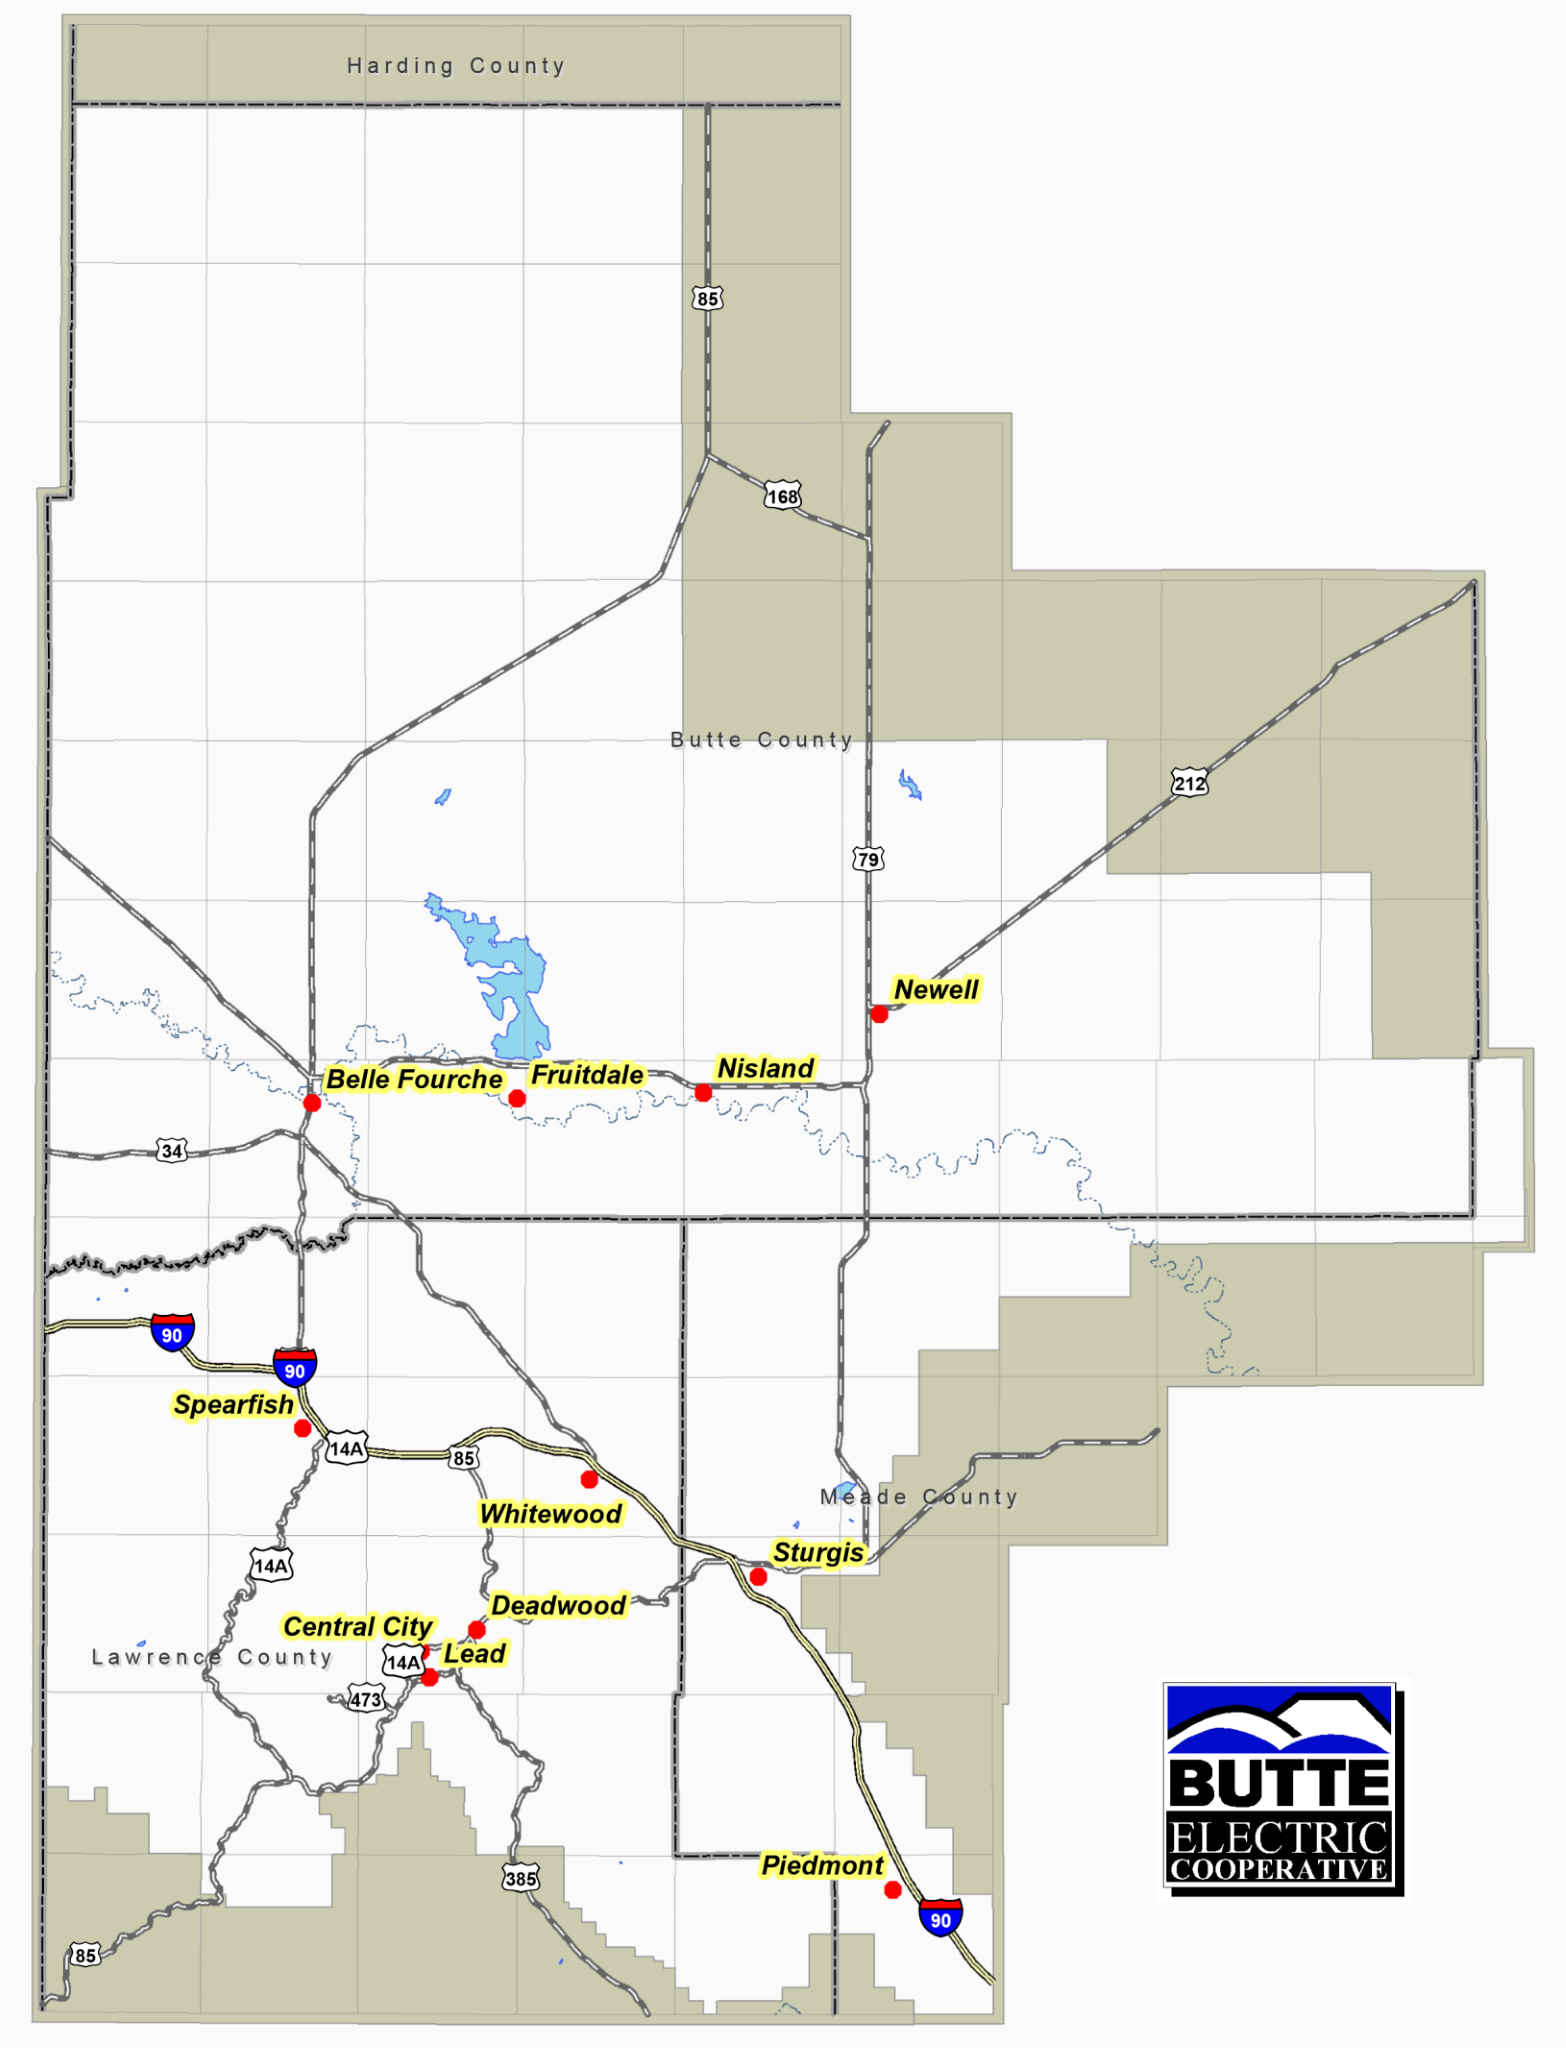 Butte Electric's Service Area Image